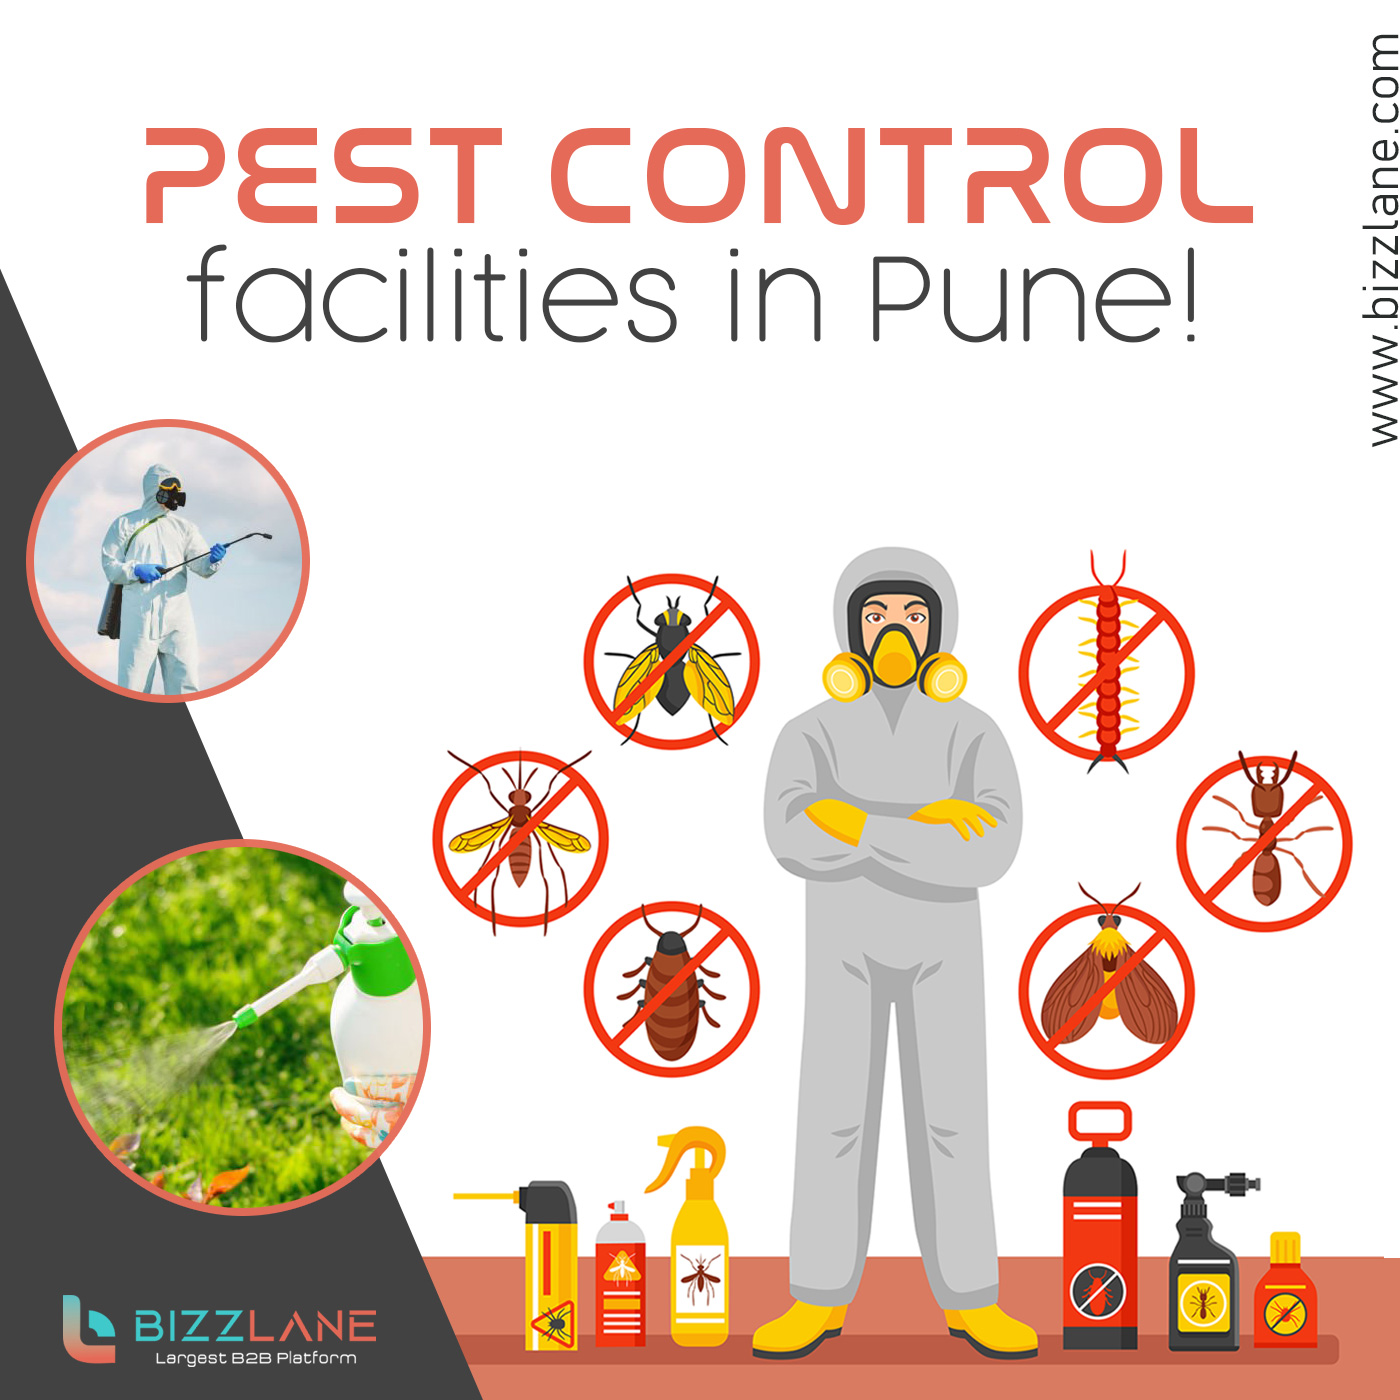 Best Pest control service in pune